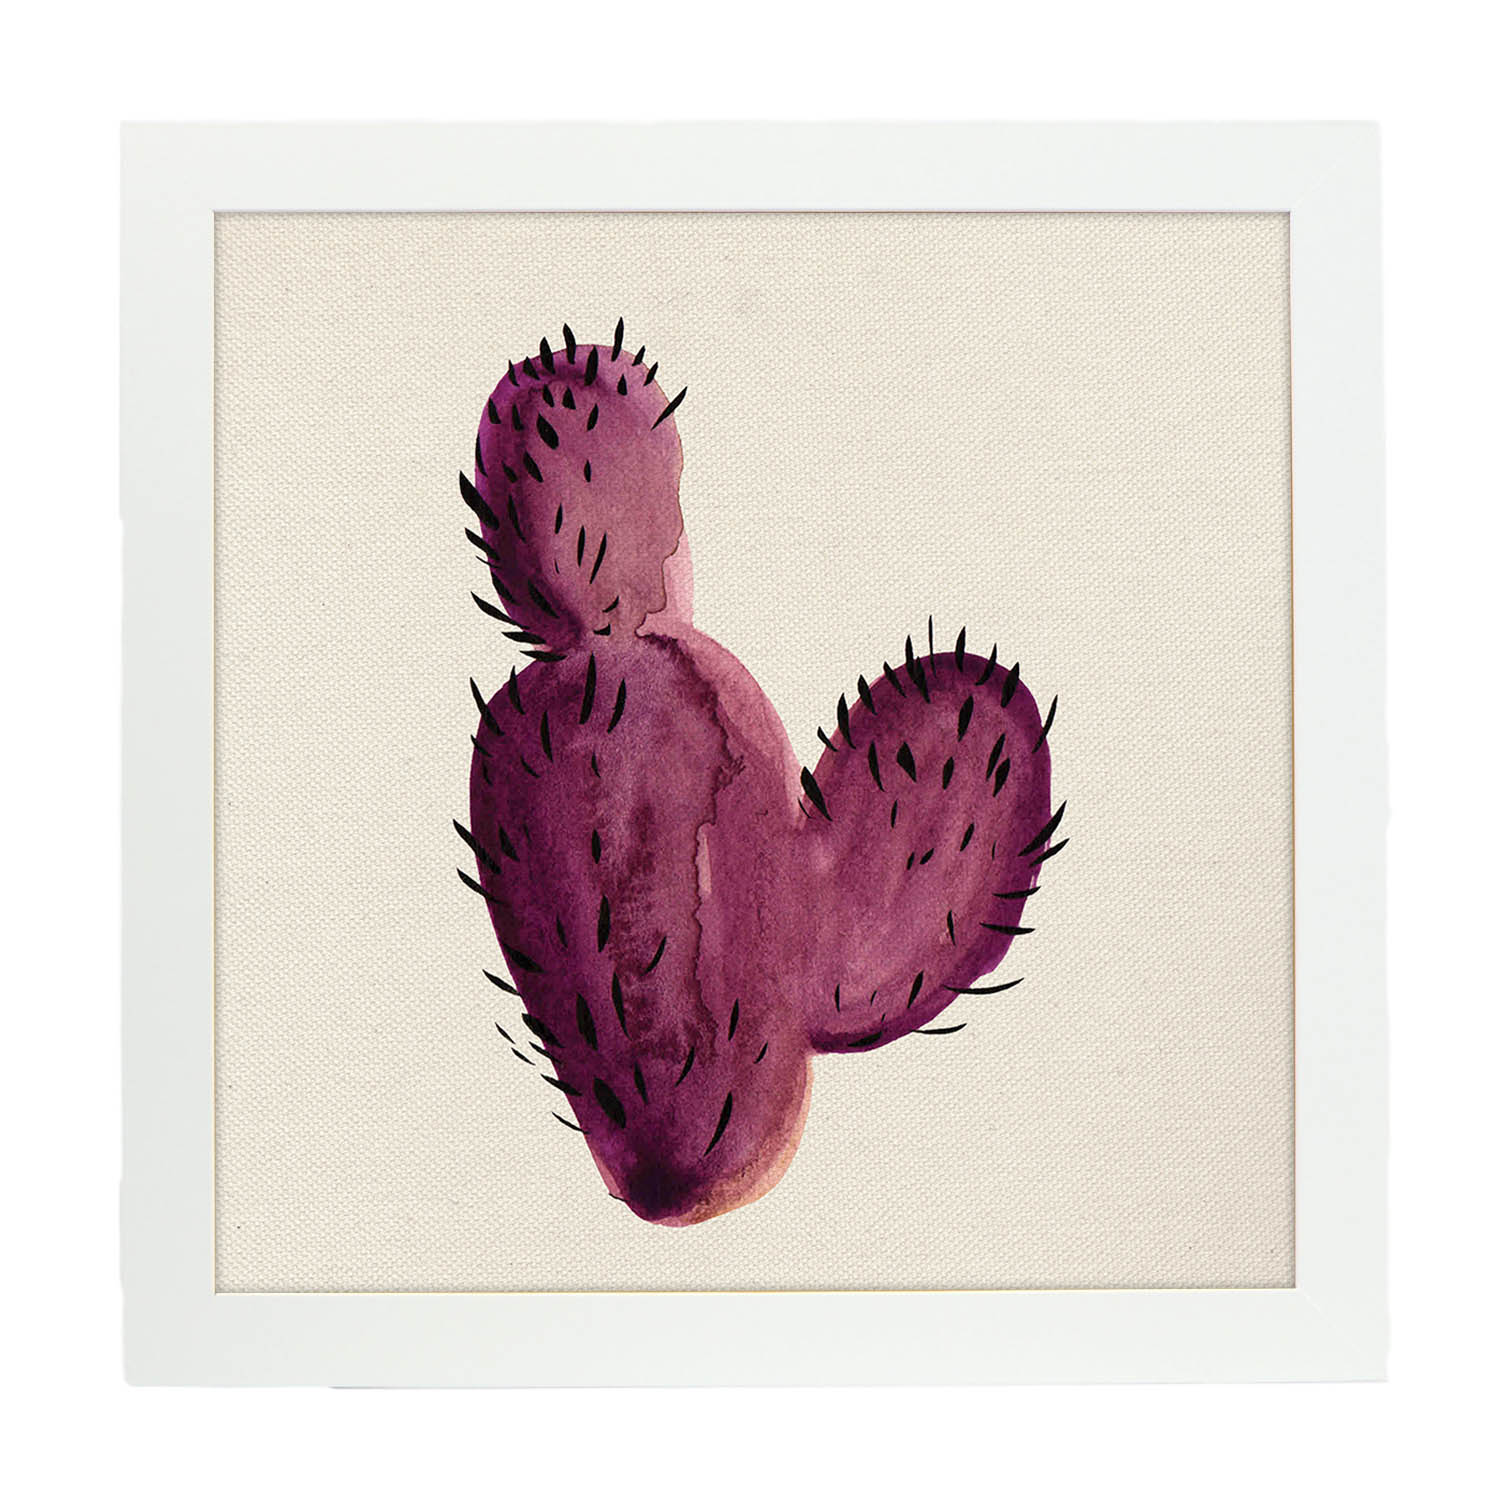 Poster de cactus dibujado. Lámina de Espinas de color-Artwork-Nacnic-25x25 cm-Marco Blanco-Nacnic Estudio SL